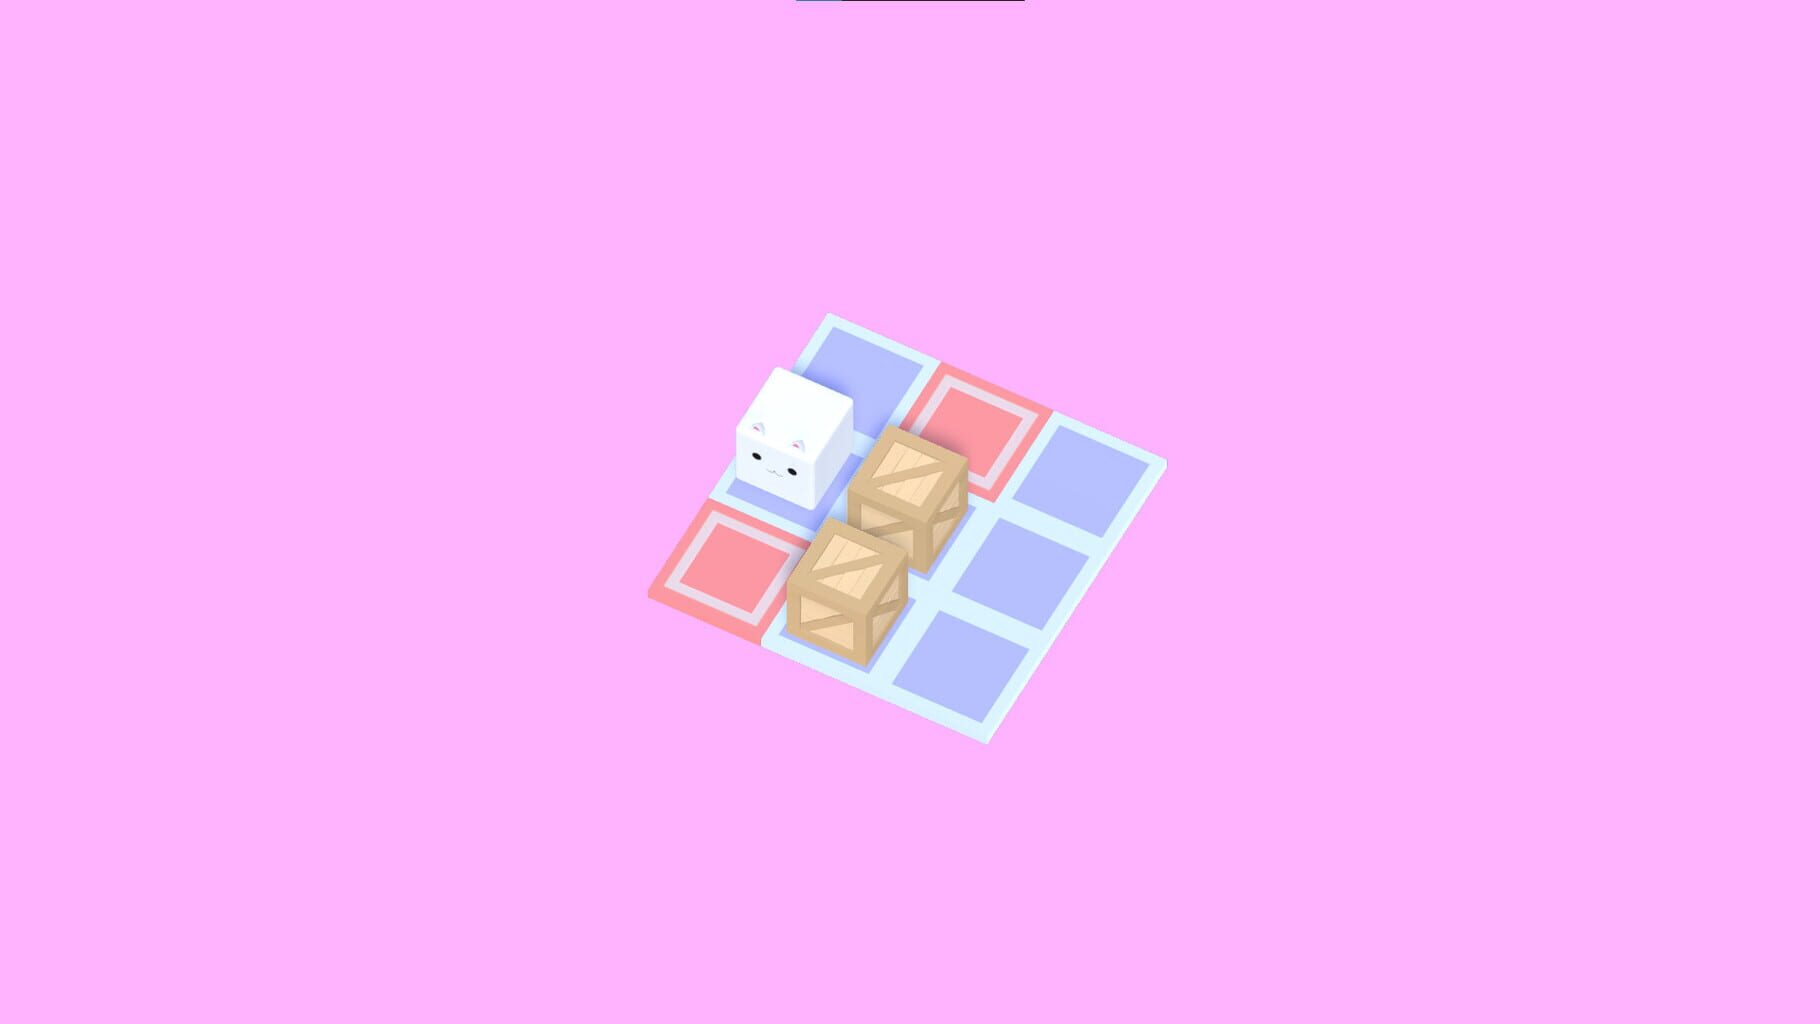 Fluffy Cubed screenshot